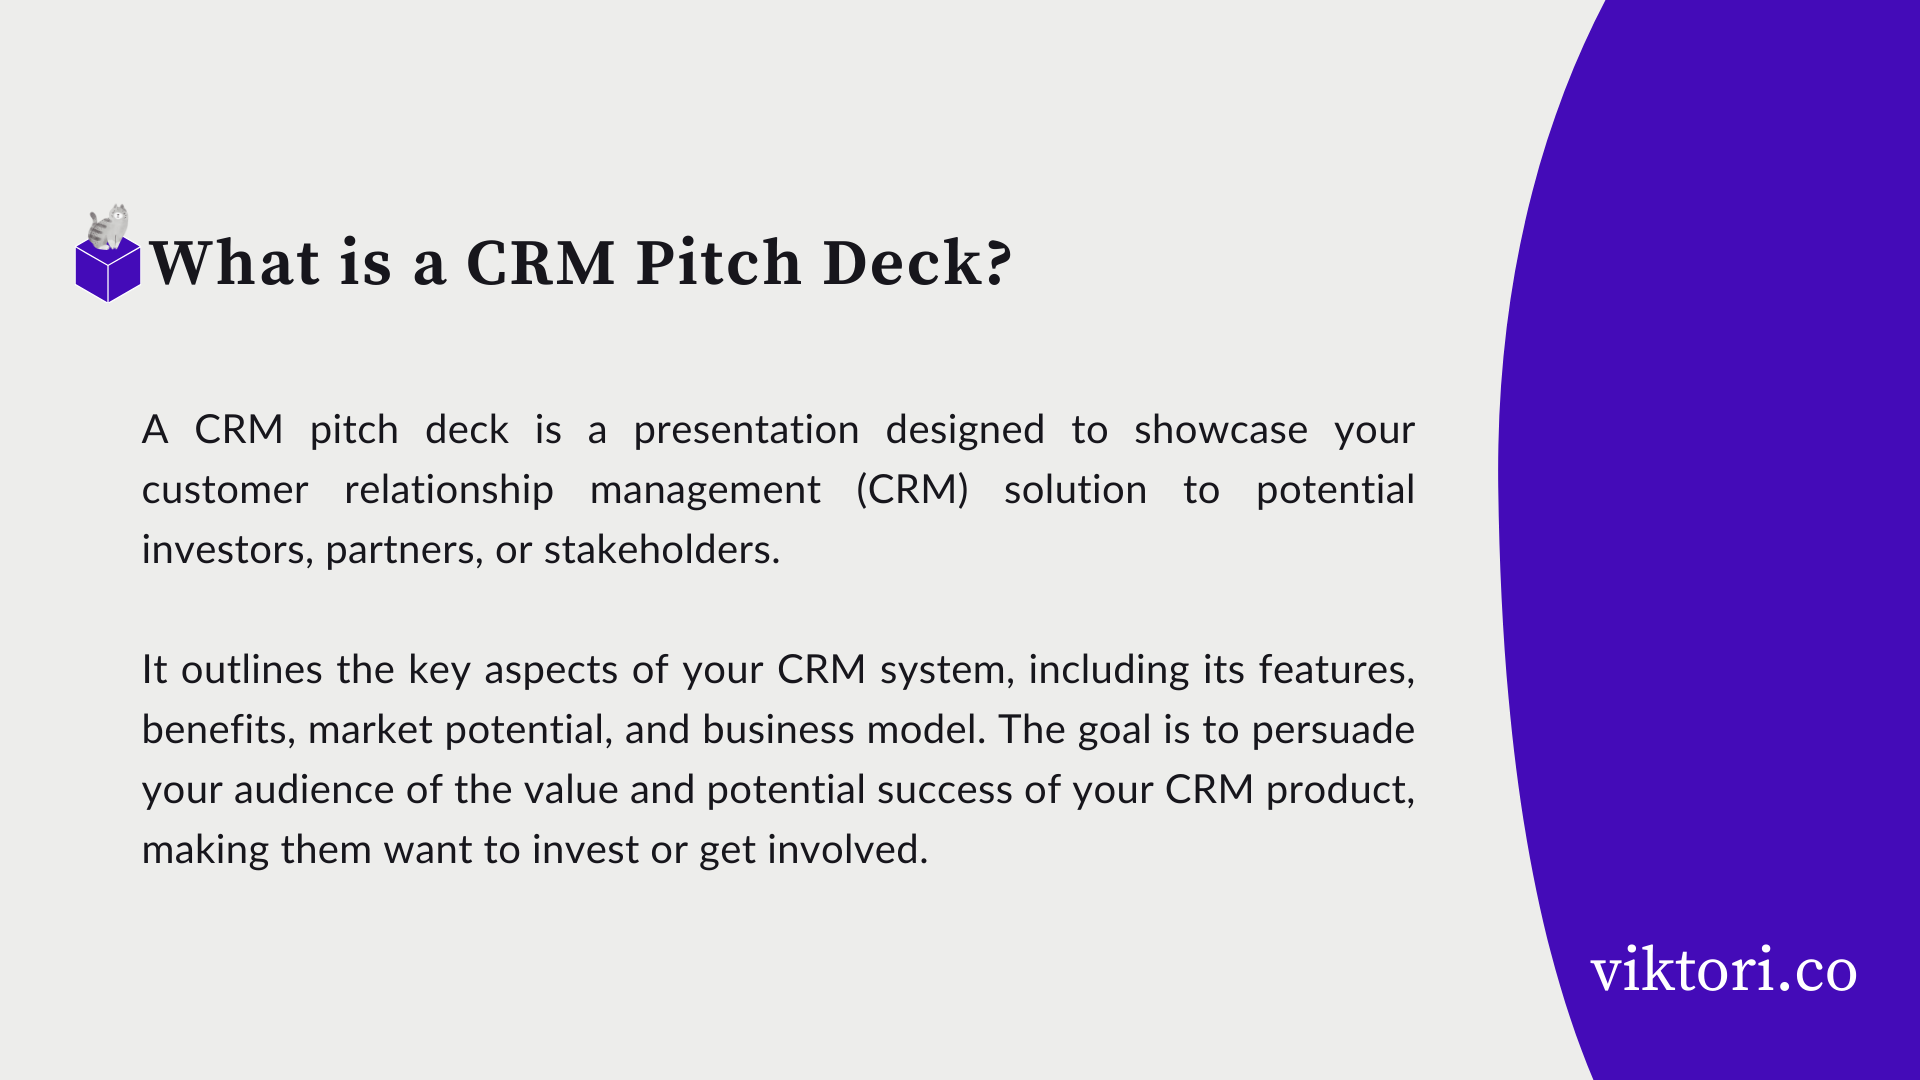 crm pitch deck definition